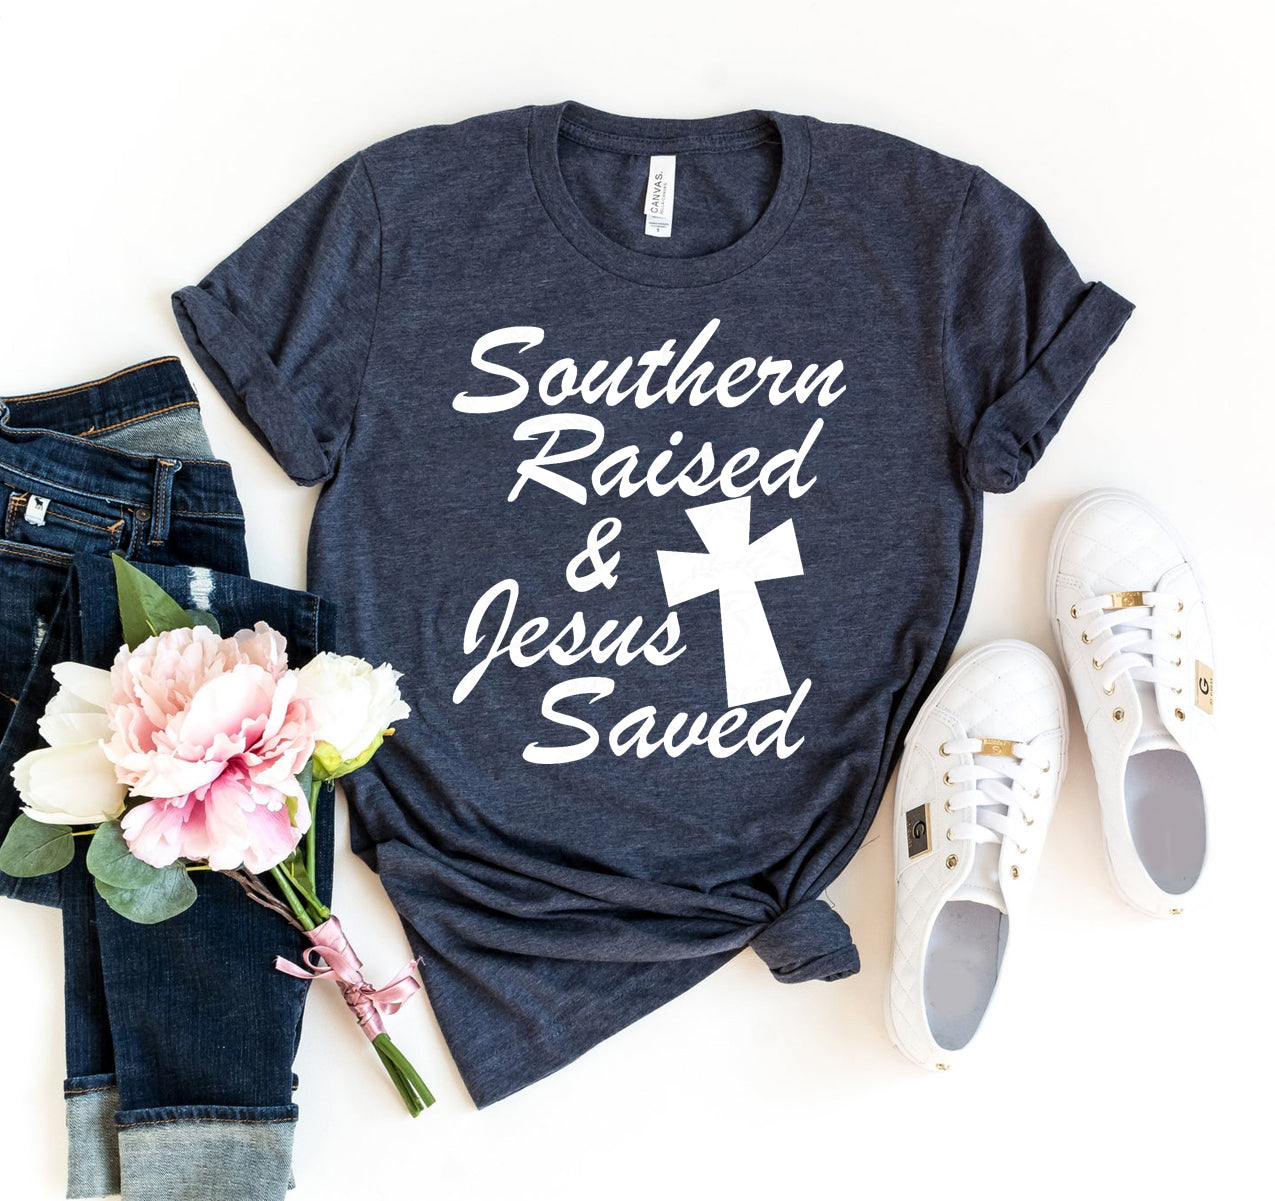 Southern Raised & Jesus Saved T-shirt